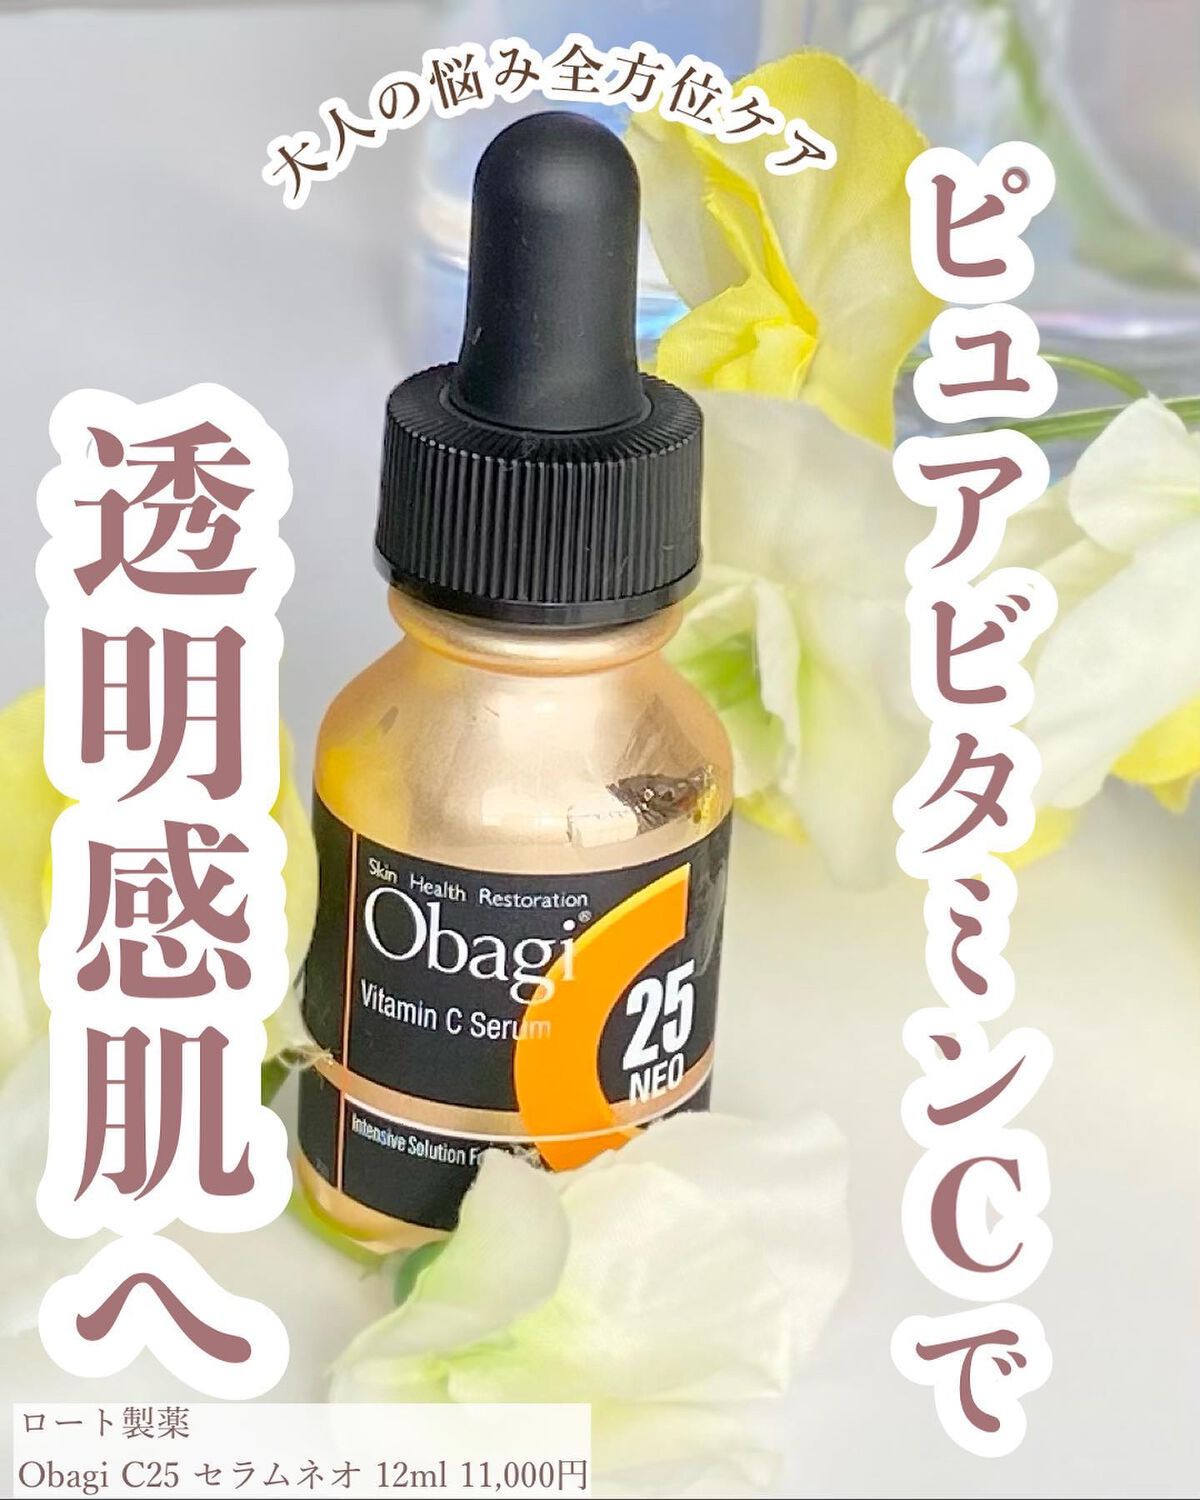 Obagi オバジC25セラム ネオ 12ml - 美容液